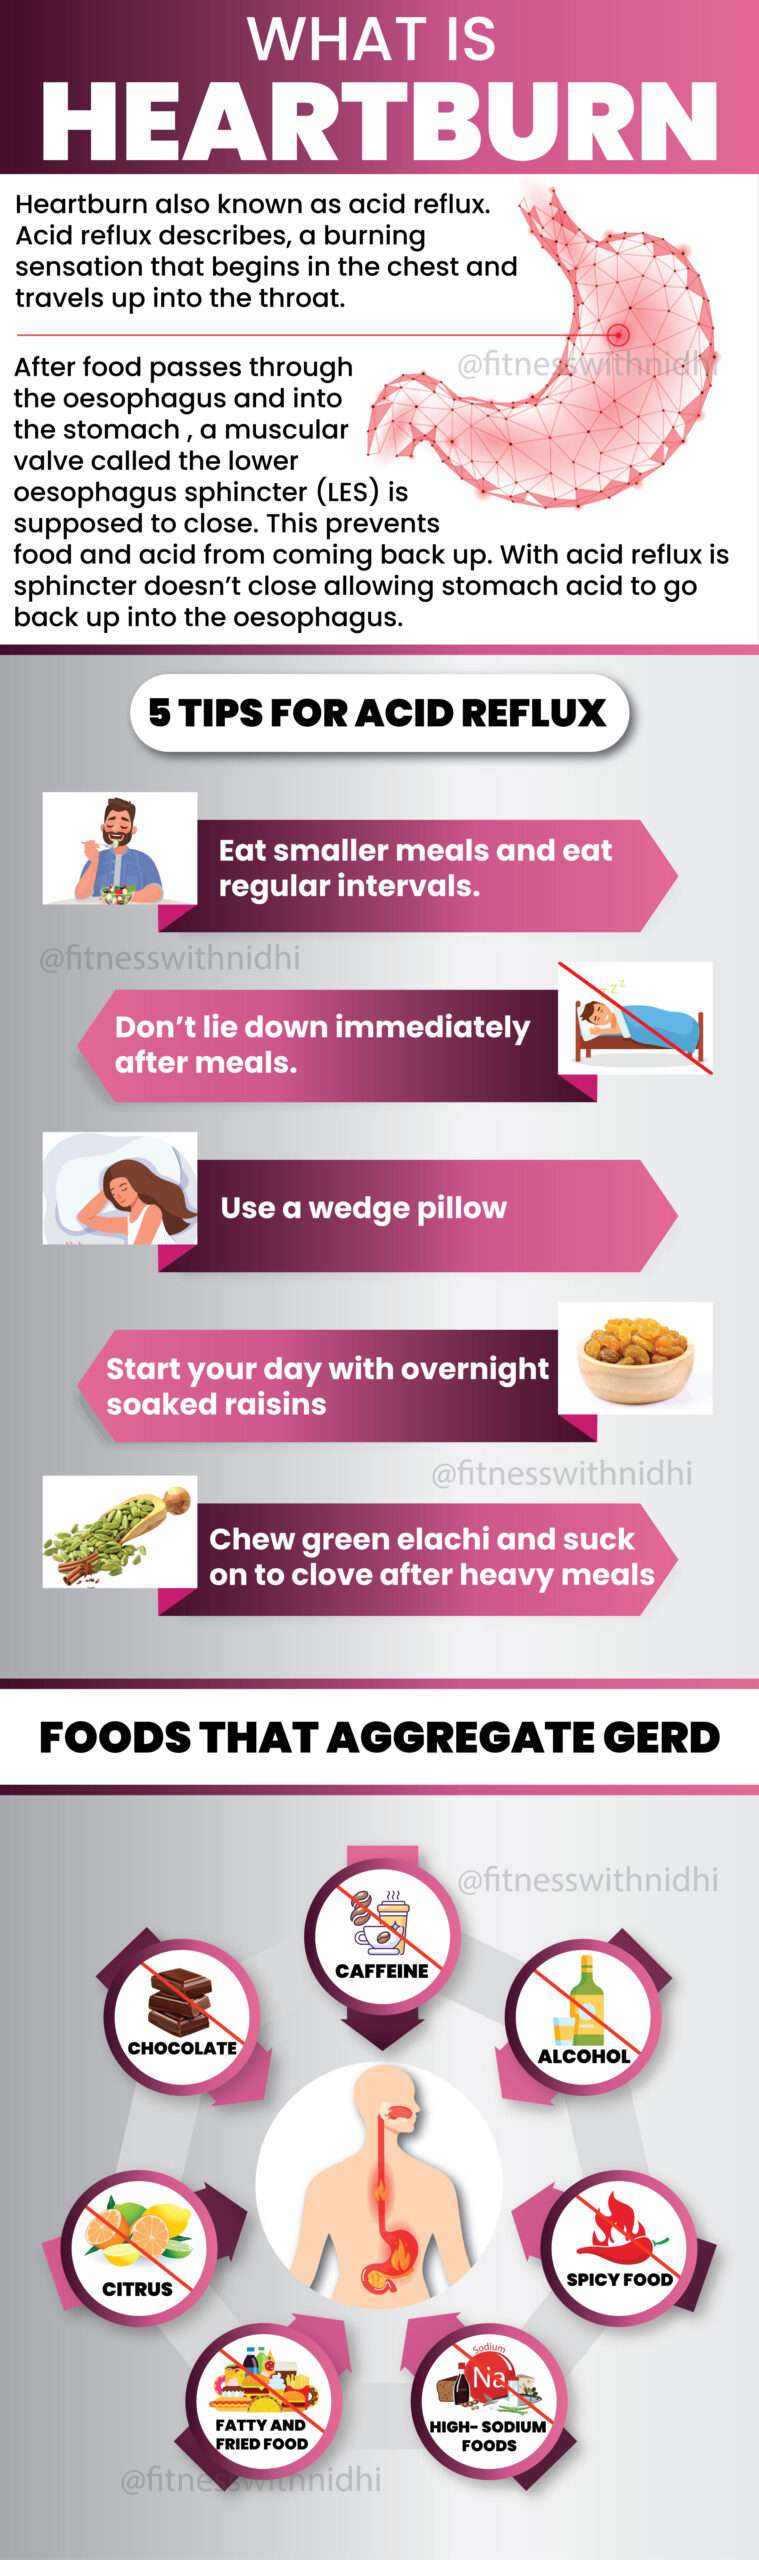 tips to avoid acid reflux heartburn